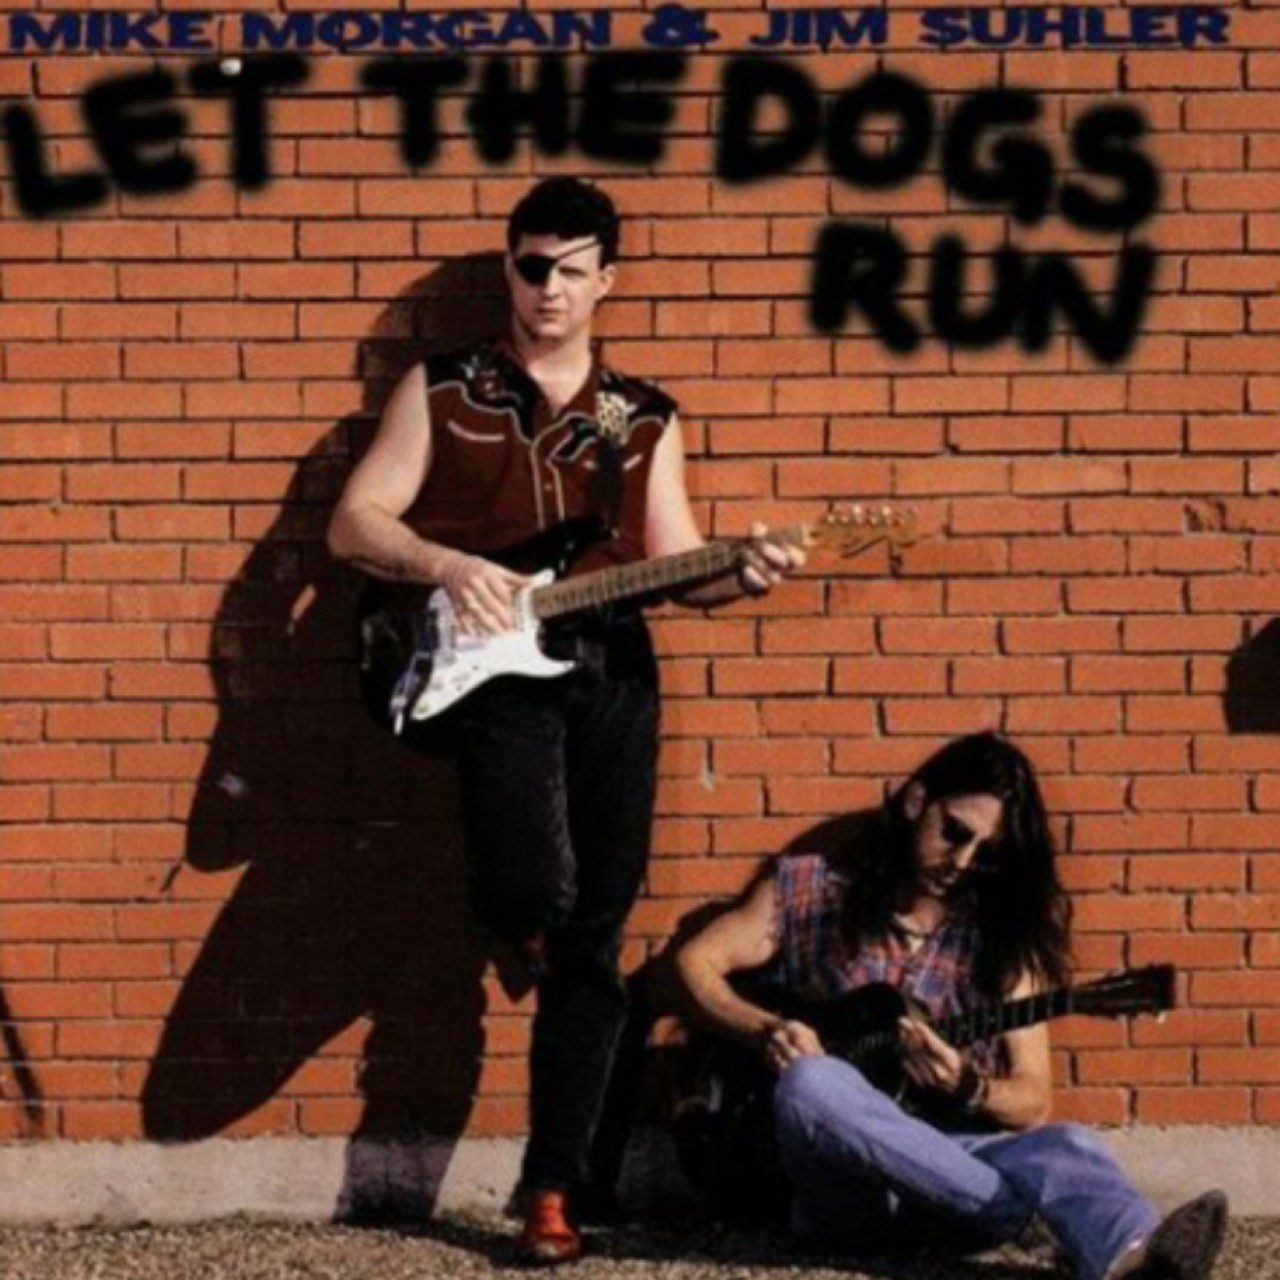 Mike Morgan & Jim Suhler – Let The Dog Run cover album